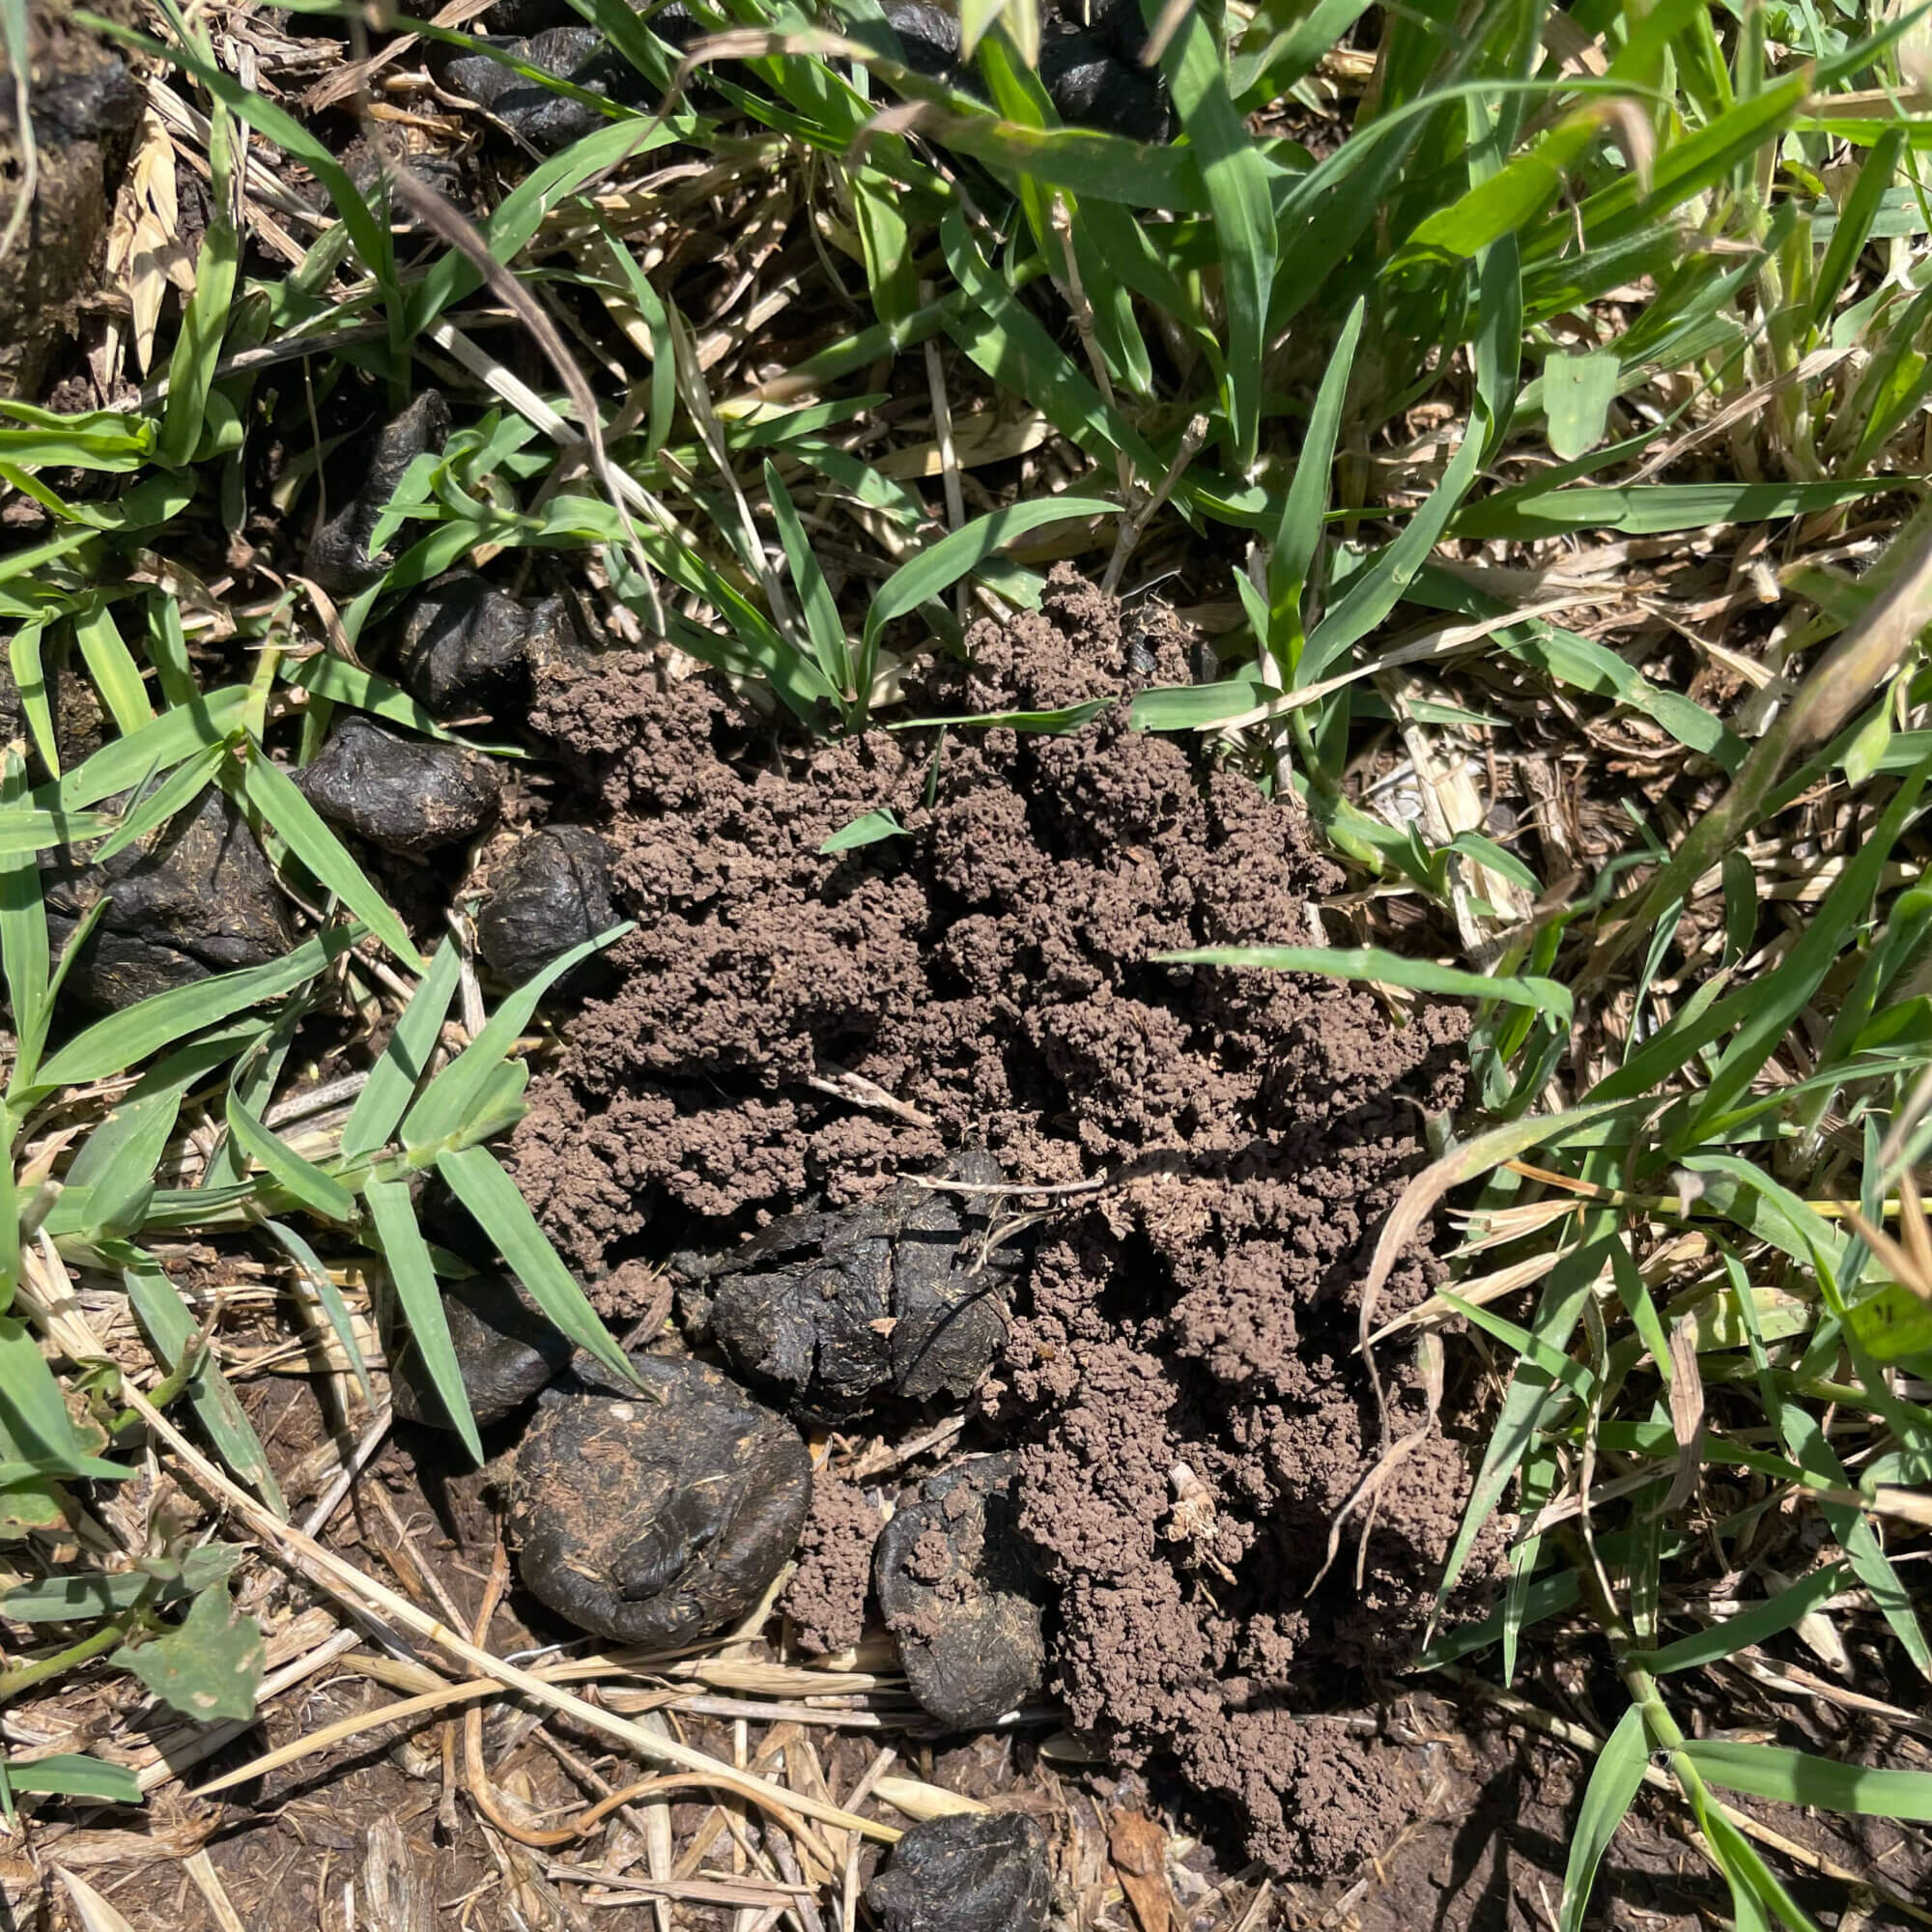 Livestock dung in grass